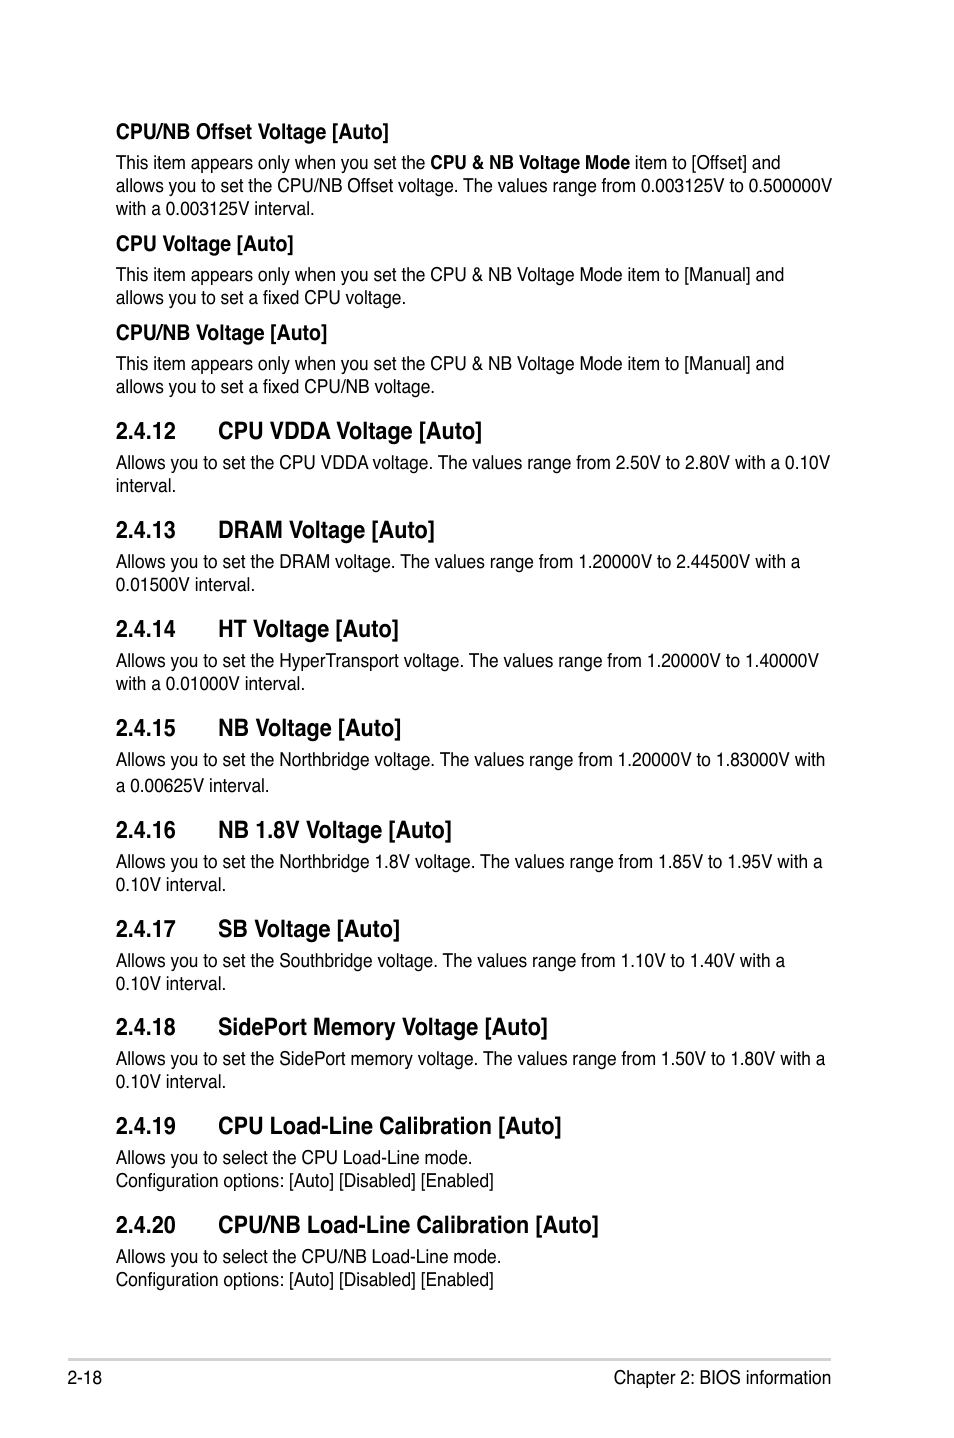 12 cpu vdda voltage, 13 dram voltage, 14 ht voltage | Asus M4A88T-V  EVO/USB3 User Manual | Page 68 / 84 | Original mode